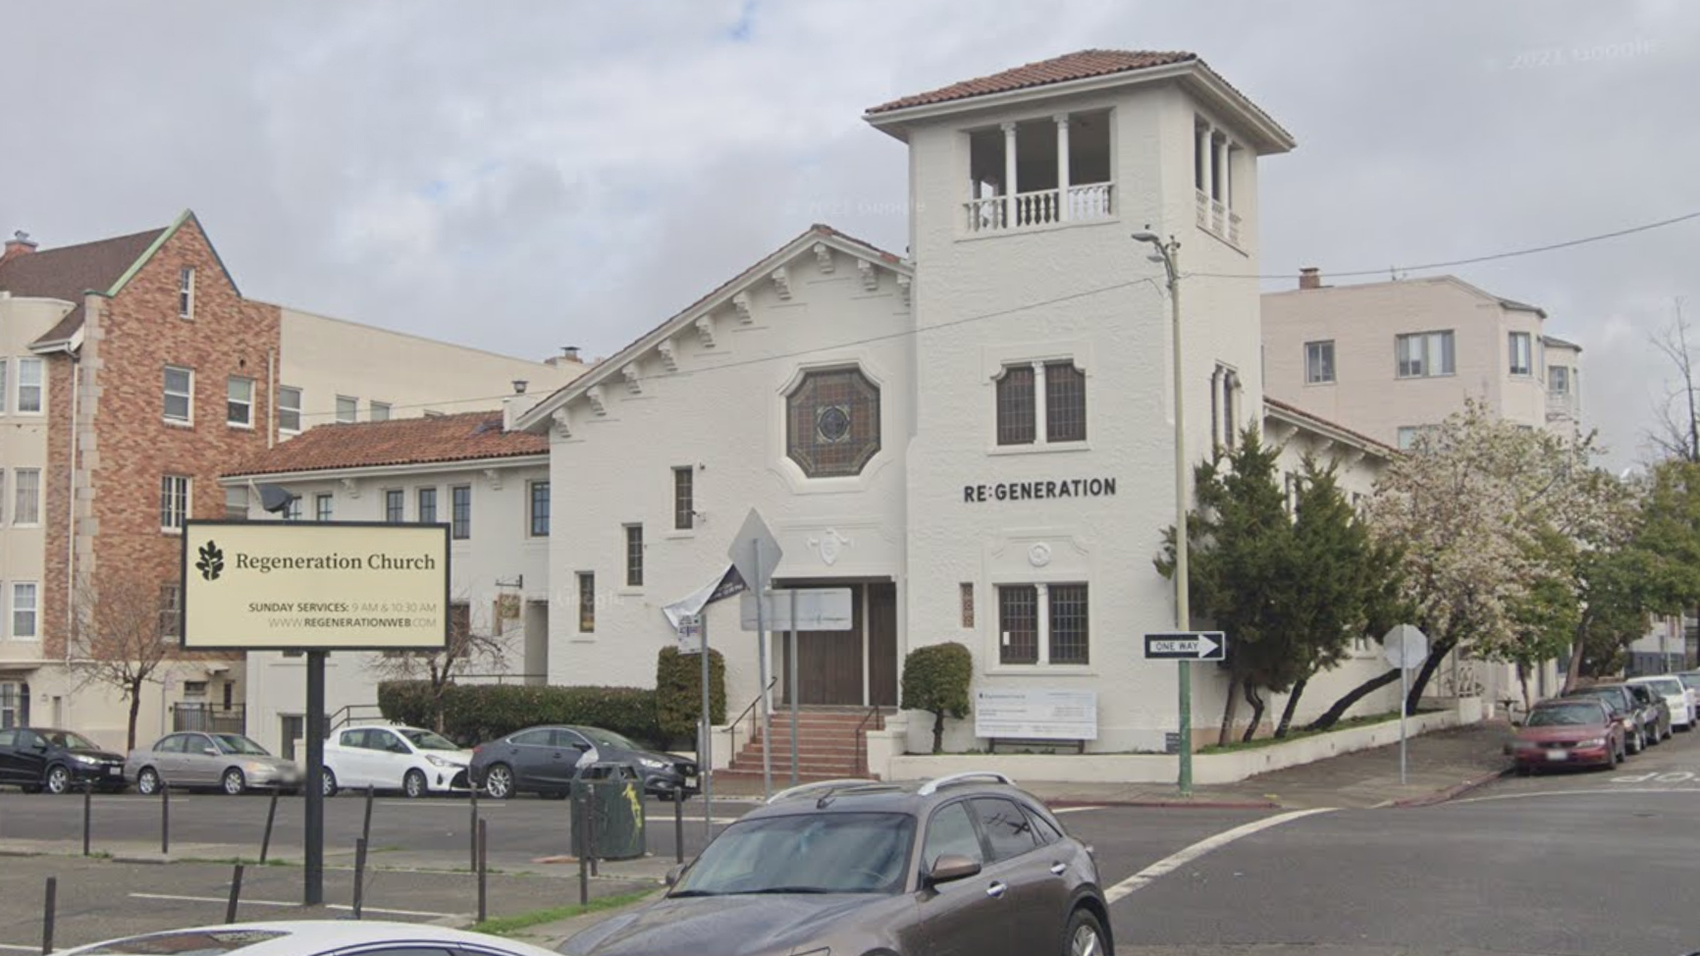 Regeneration Church in Oakland. Image courtesy of Google Maps